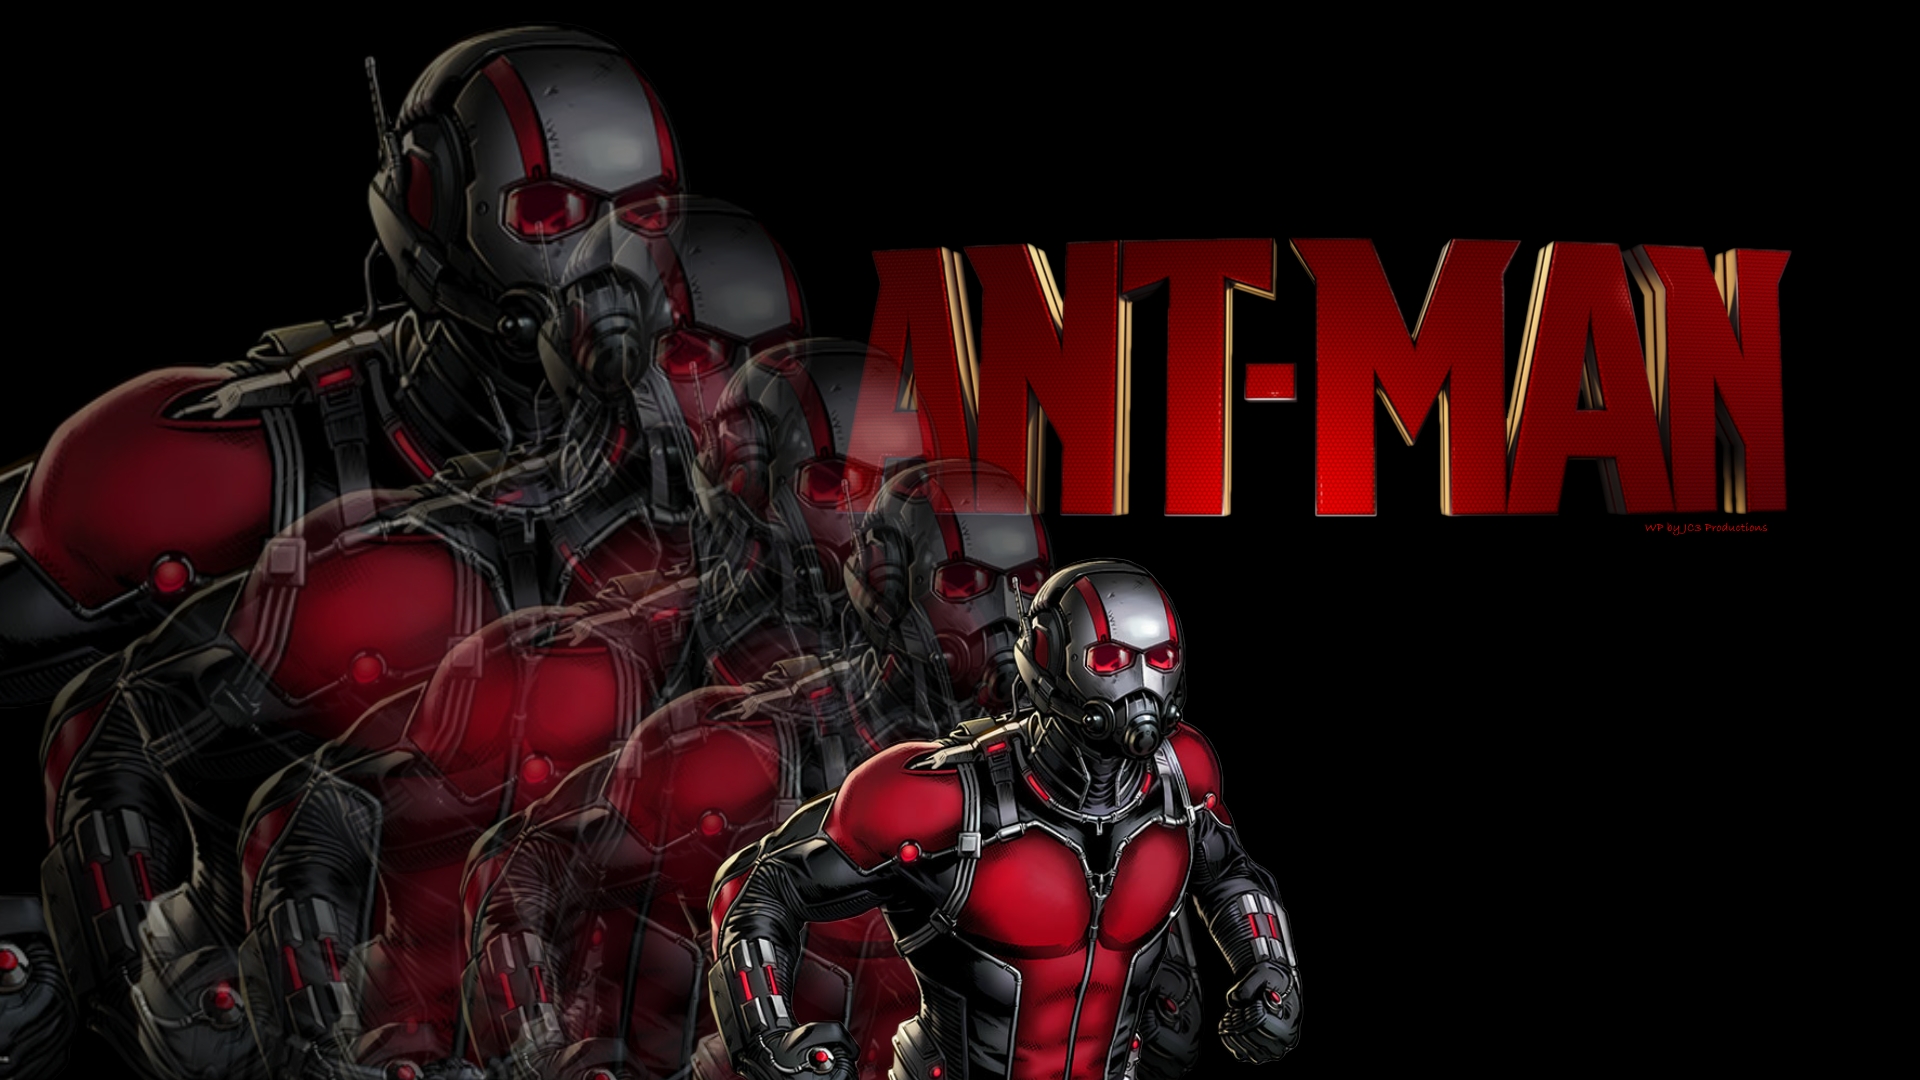 Ant-Man Fortnite Wallpapers